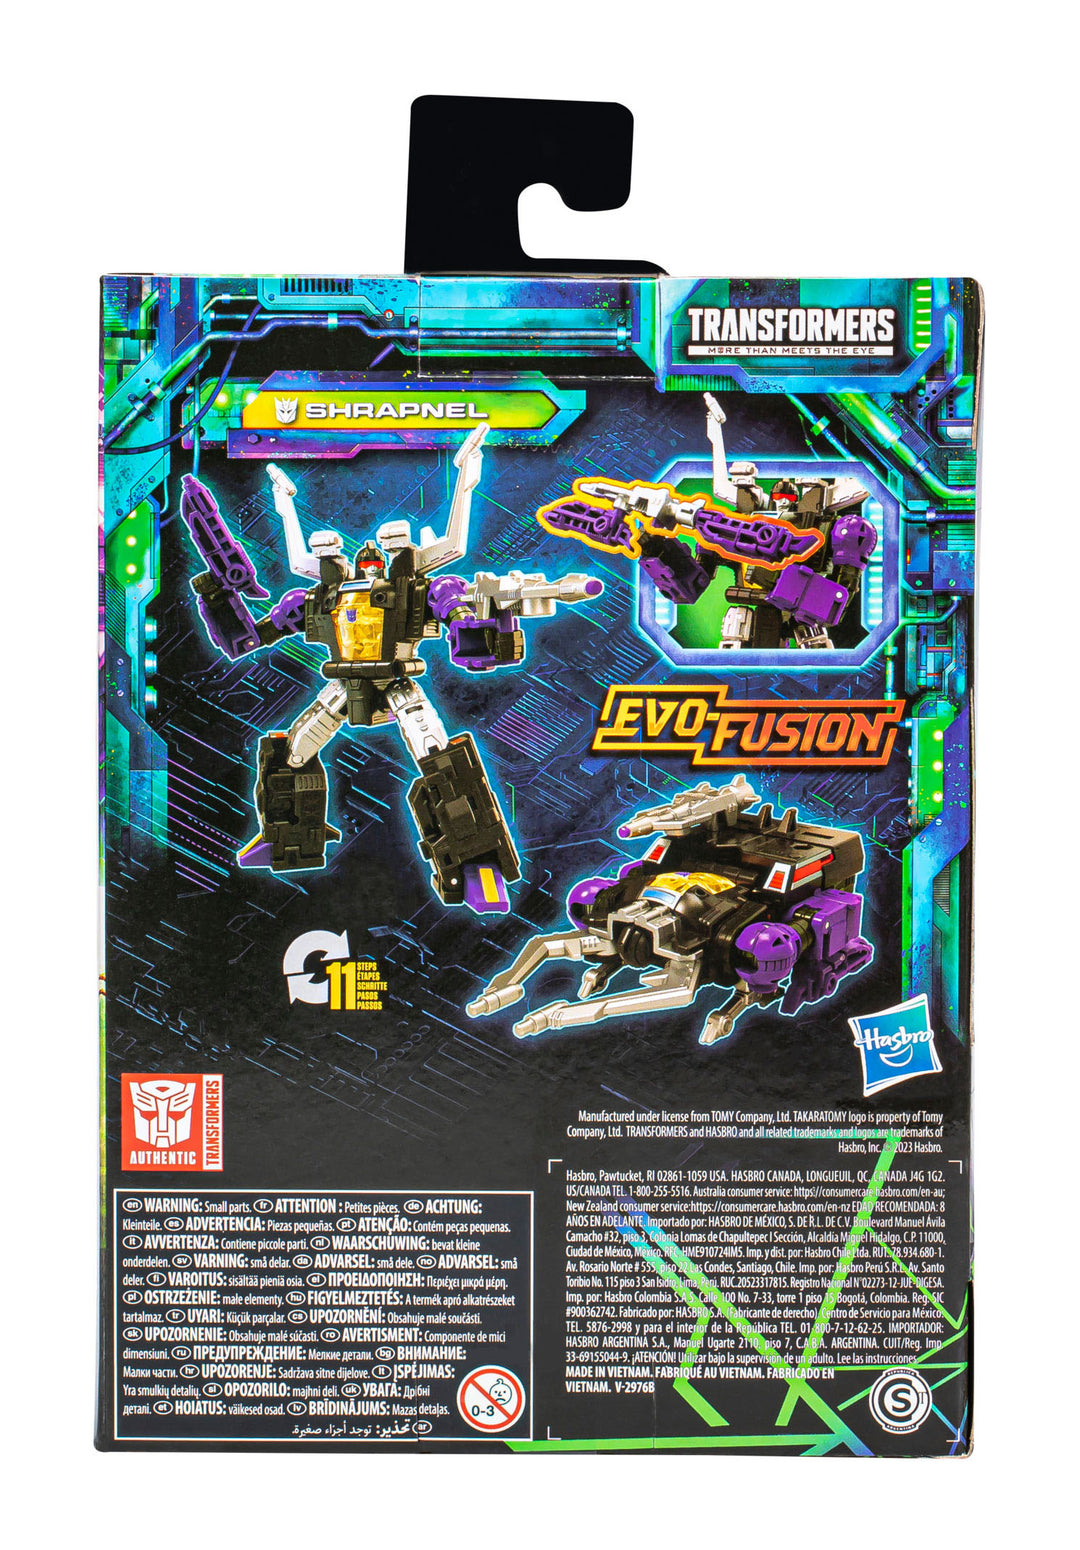 Transformers Legacy Evolution Deluxe Class Shrapnel